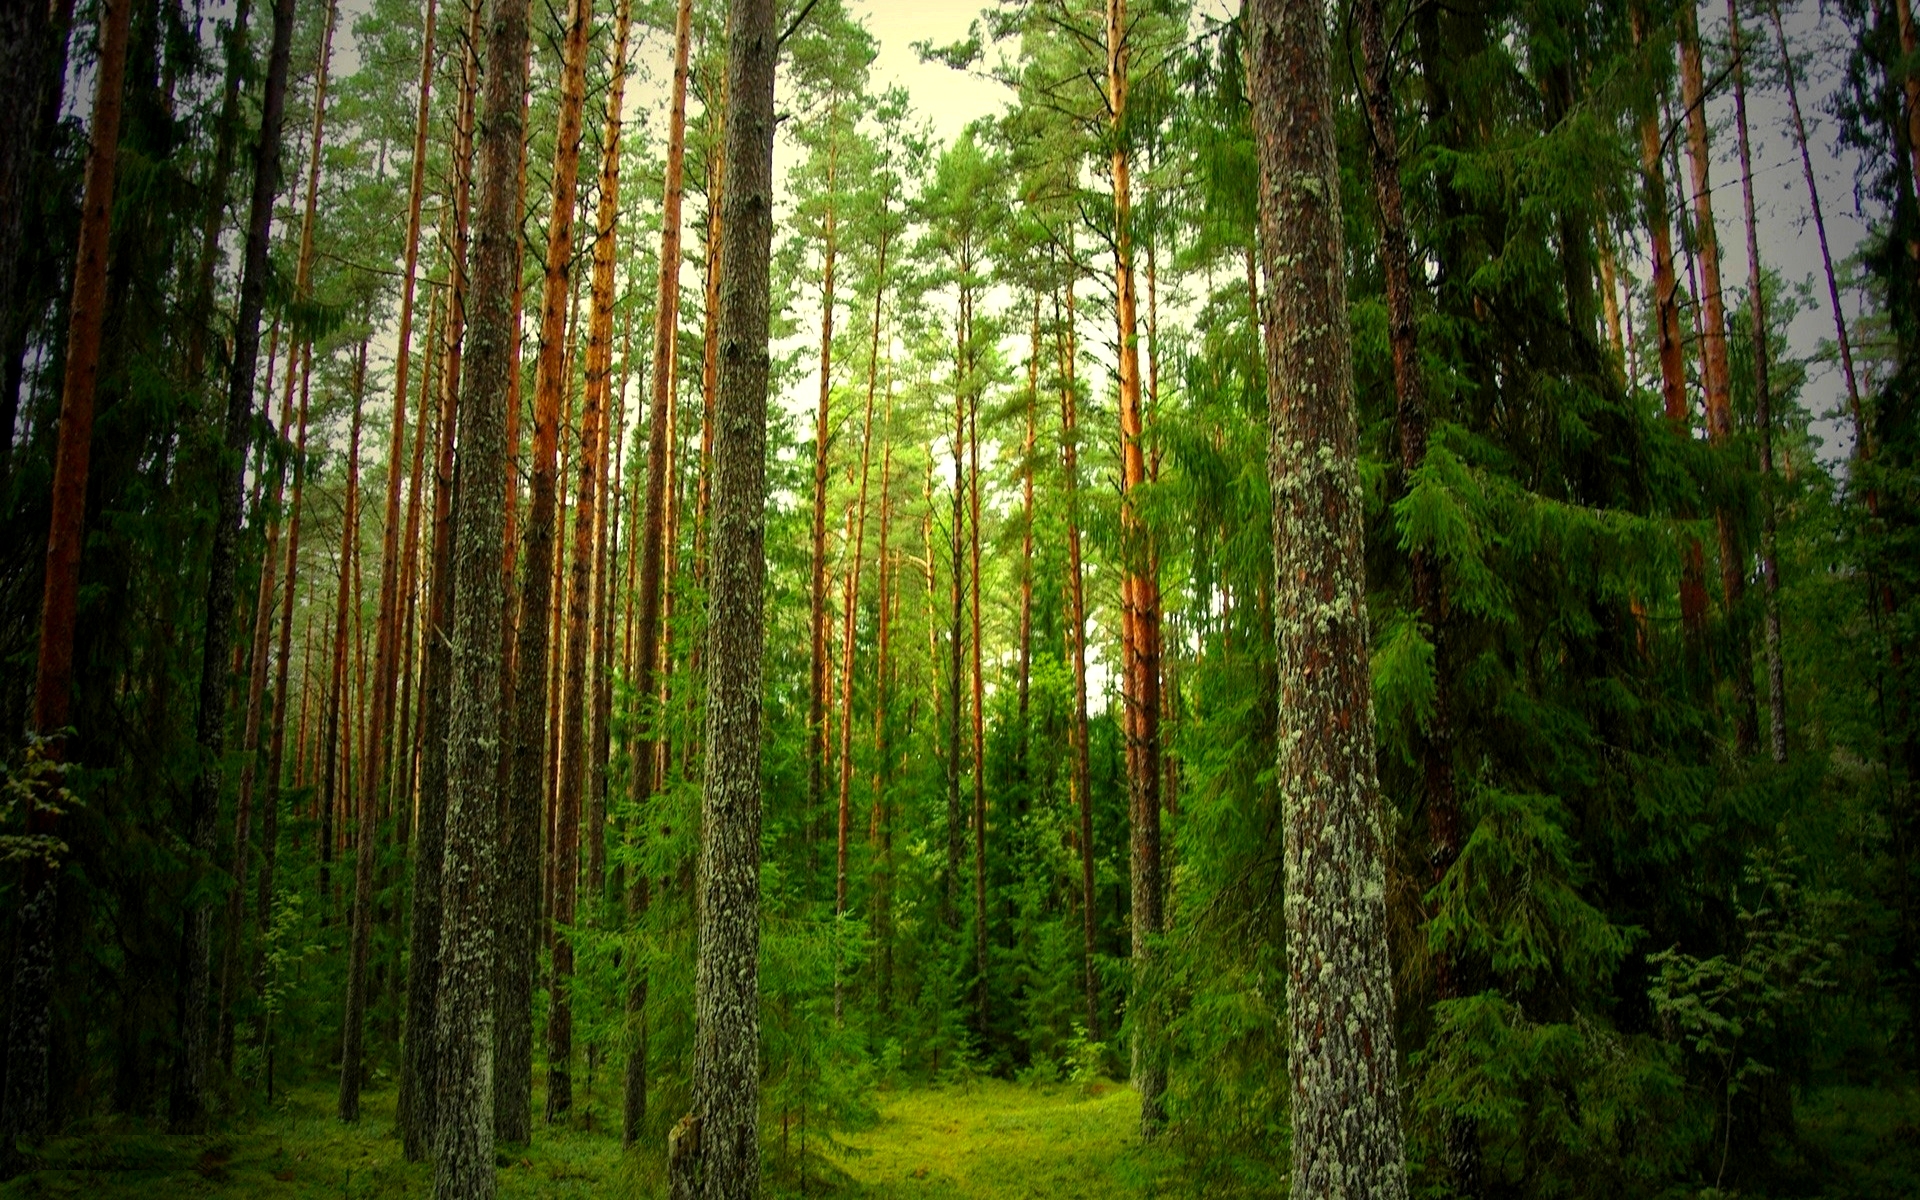 vagamon pine forest